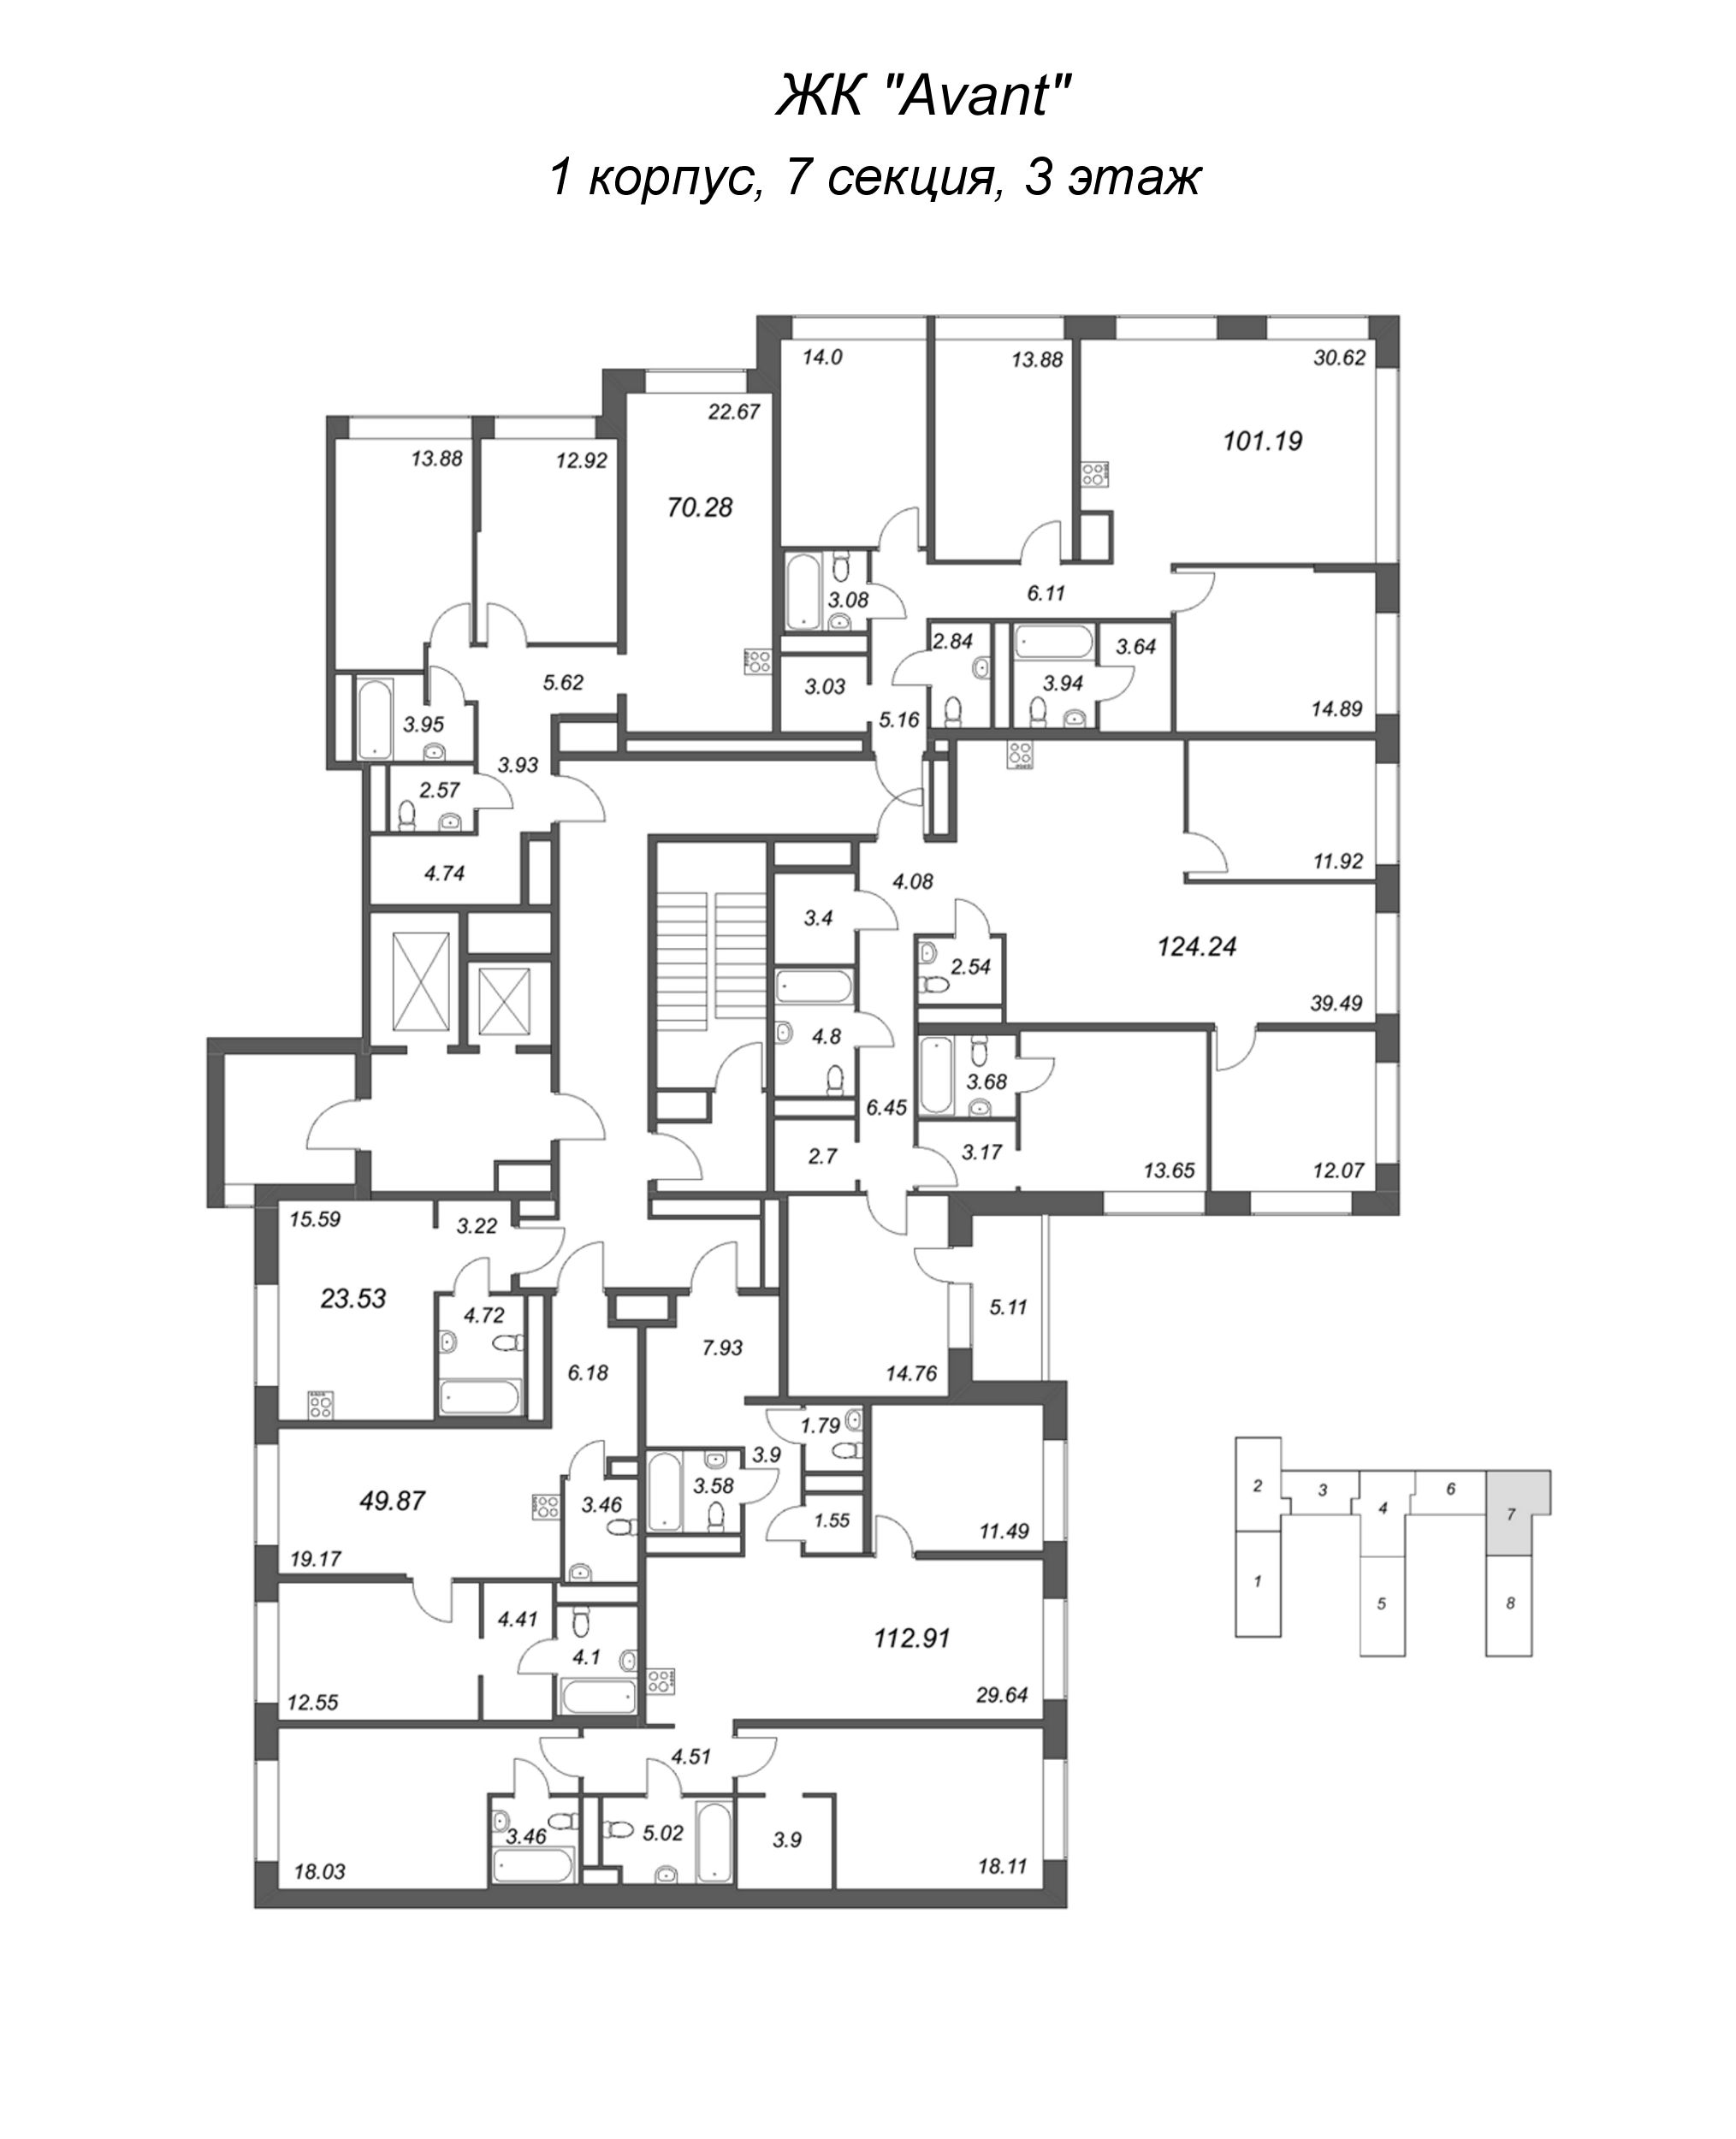 4-комнатная (Евро) квартира, 101.19 м² - планировка этажа